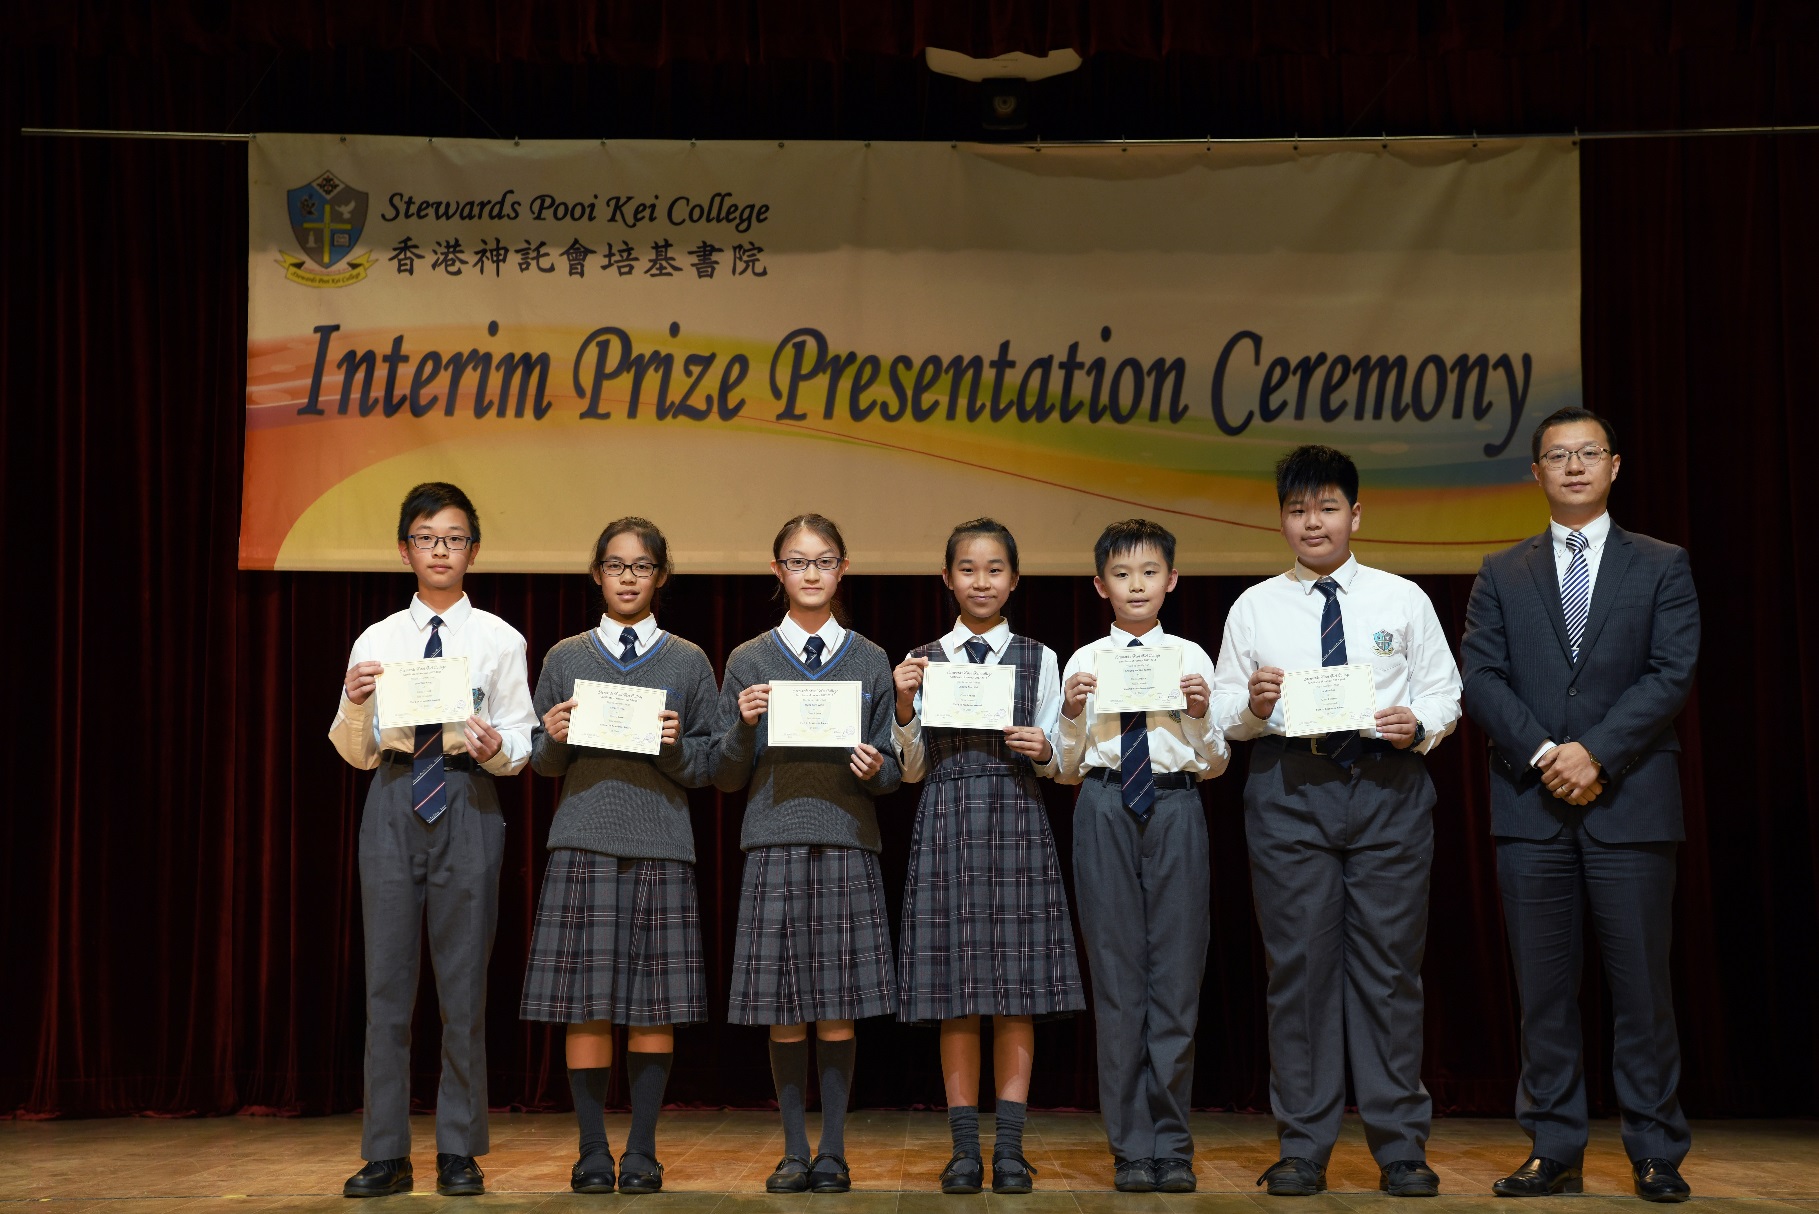 The Interim Prize Presentation Ceremony